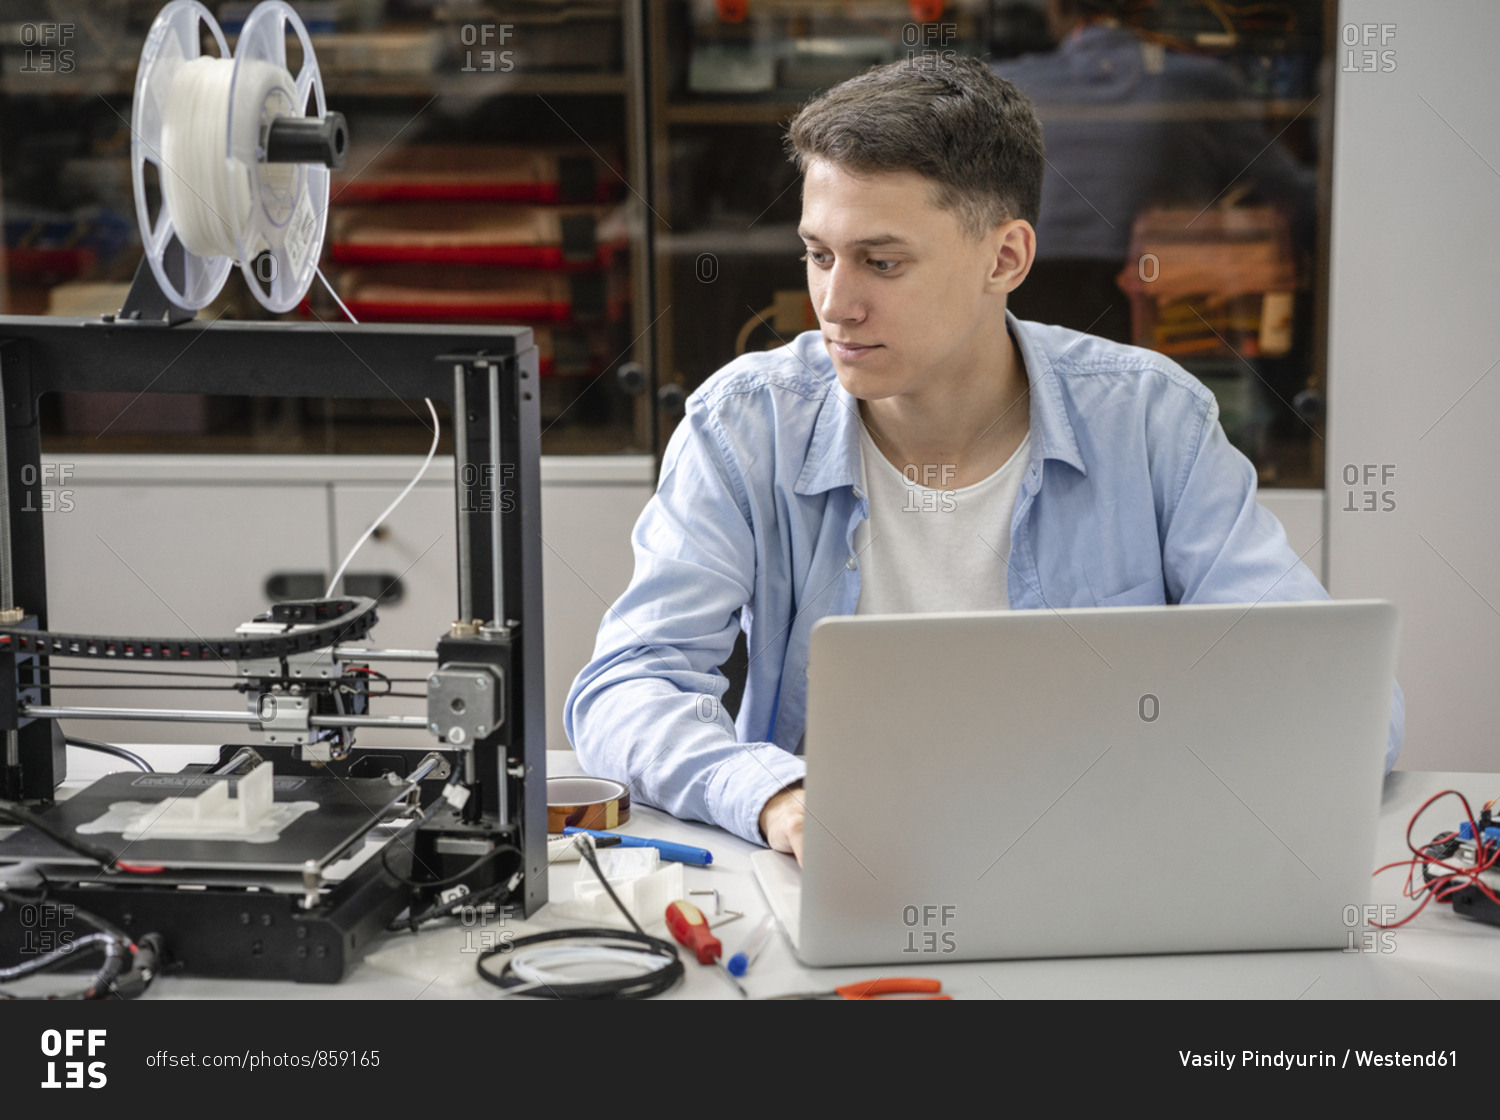 Student setting up 3D printer- using laptop